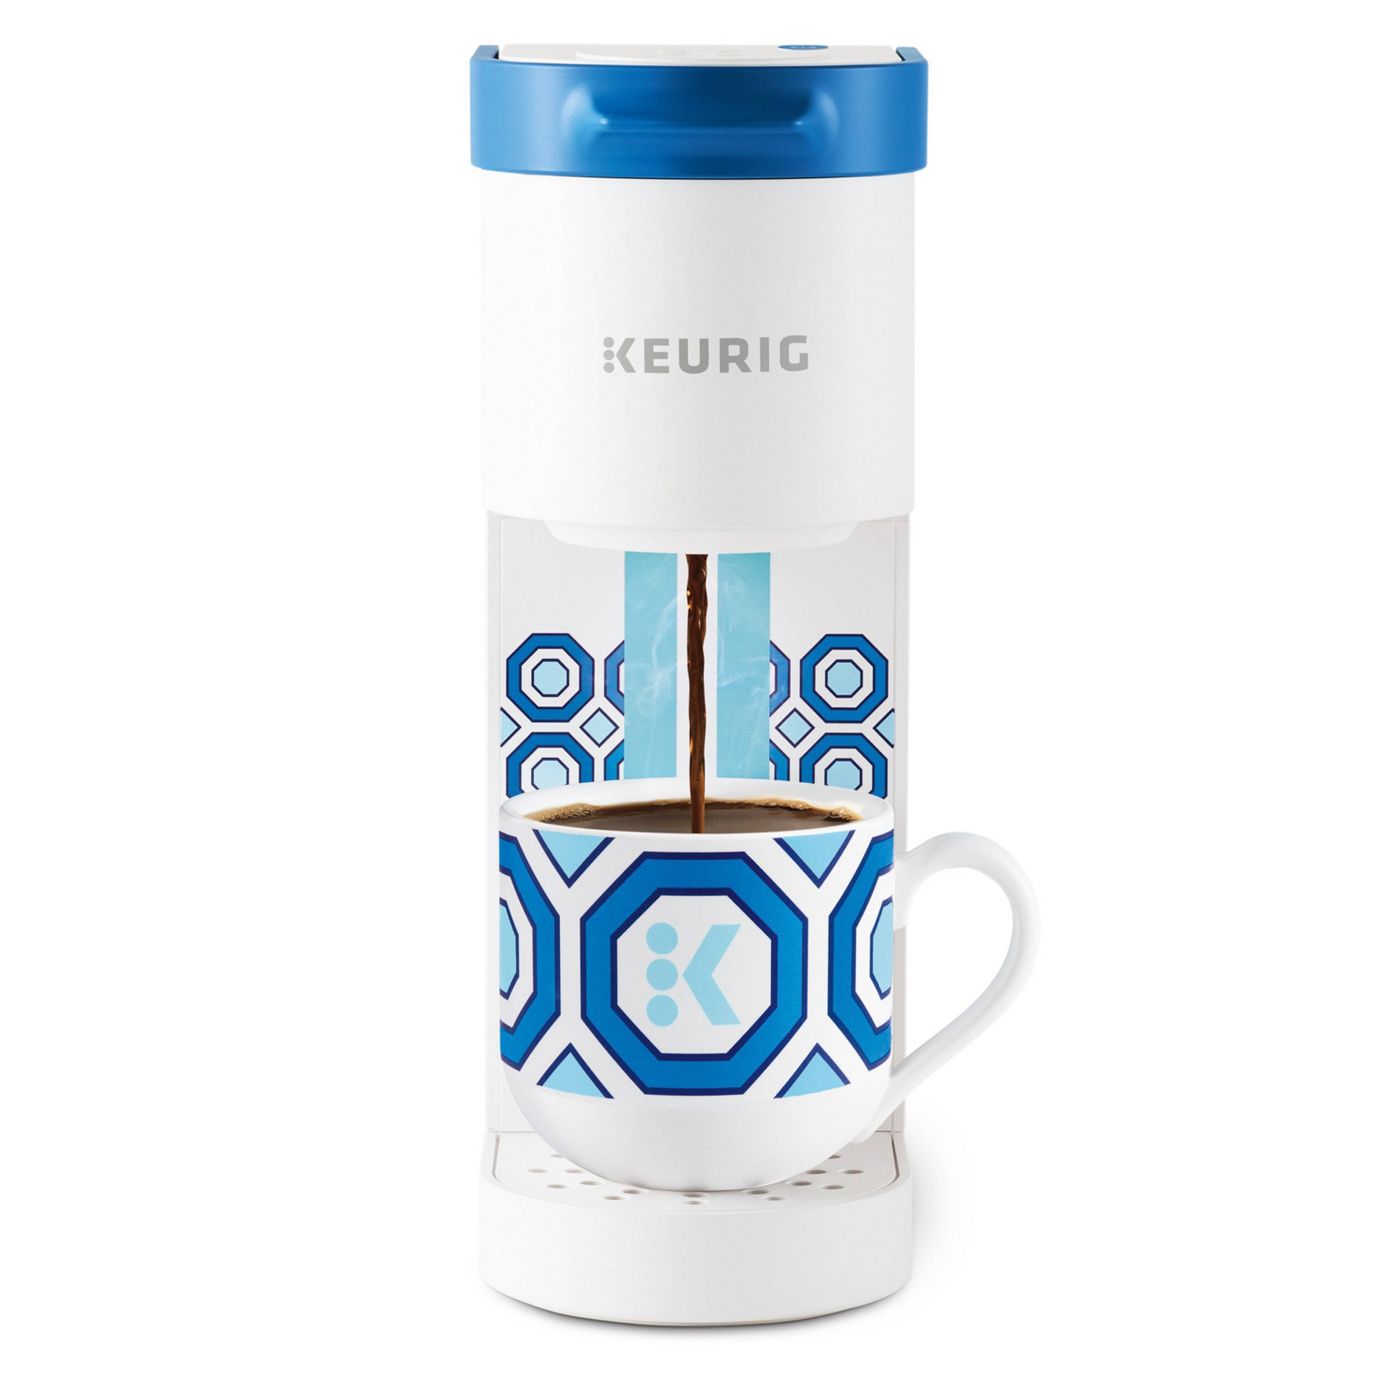 Keurig K-Mini Basic Jonathan Adler Limited Edition Single-Serve K-Cup Pod Coffee Maker (White)